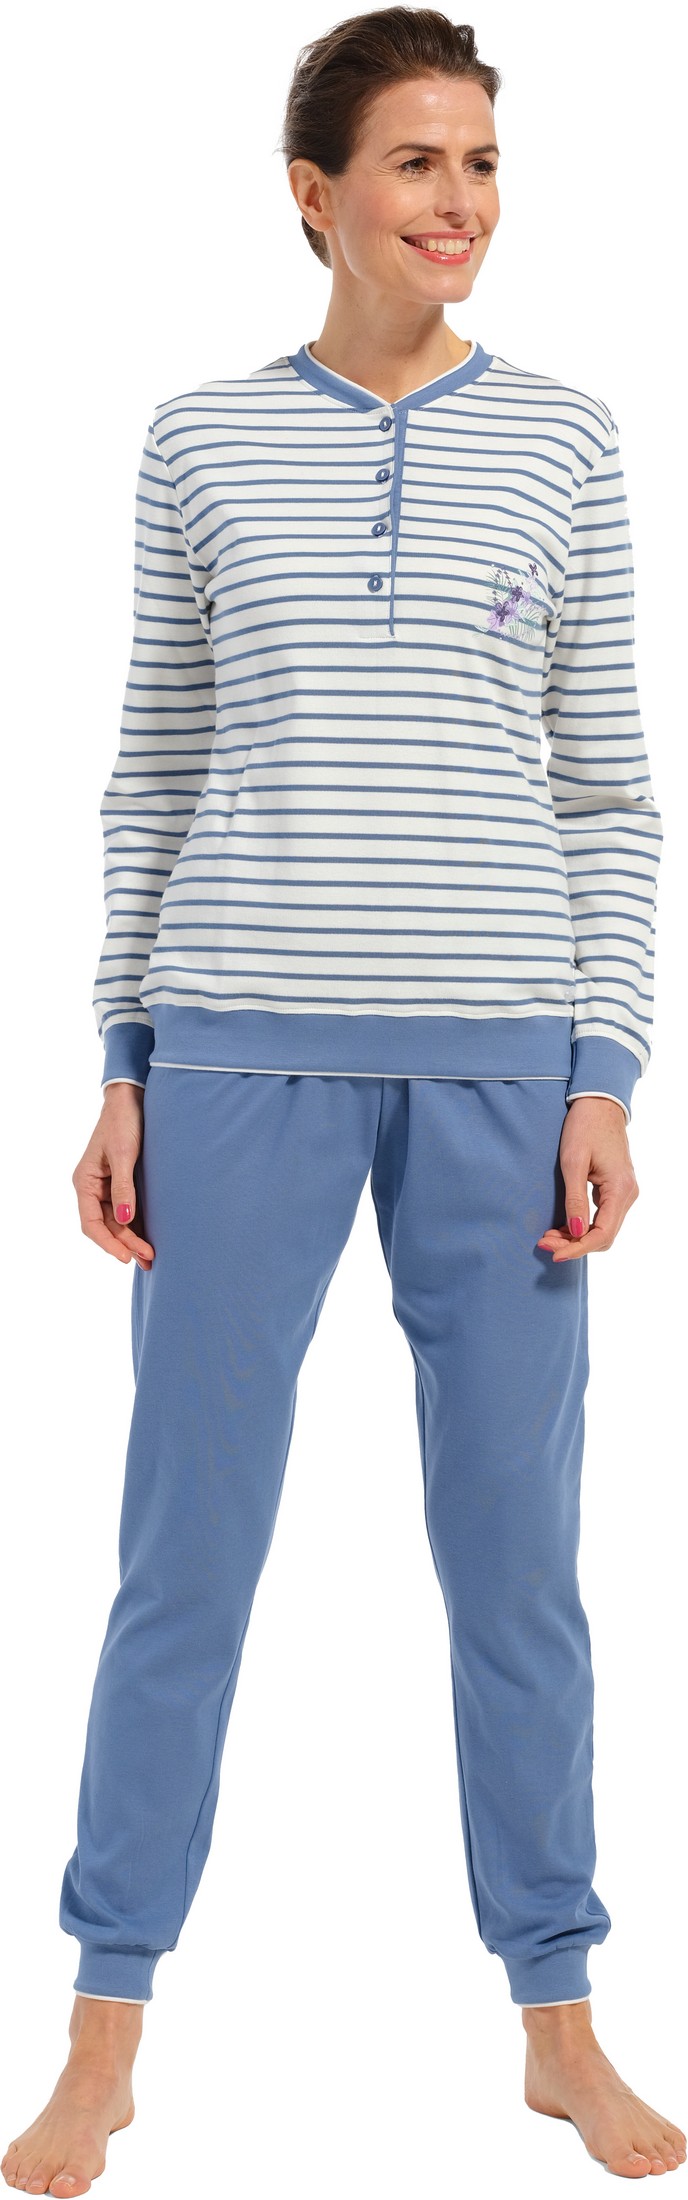 Pastunette dames pyjama katoen 20232-172-4 - Blauw - 44